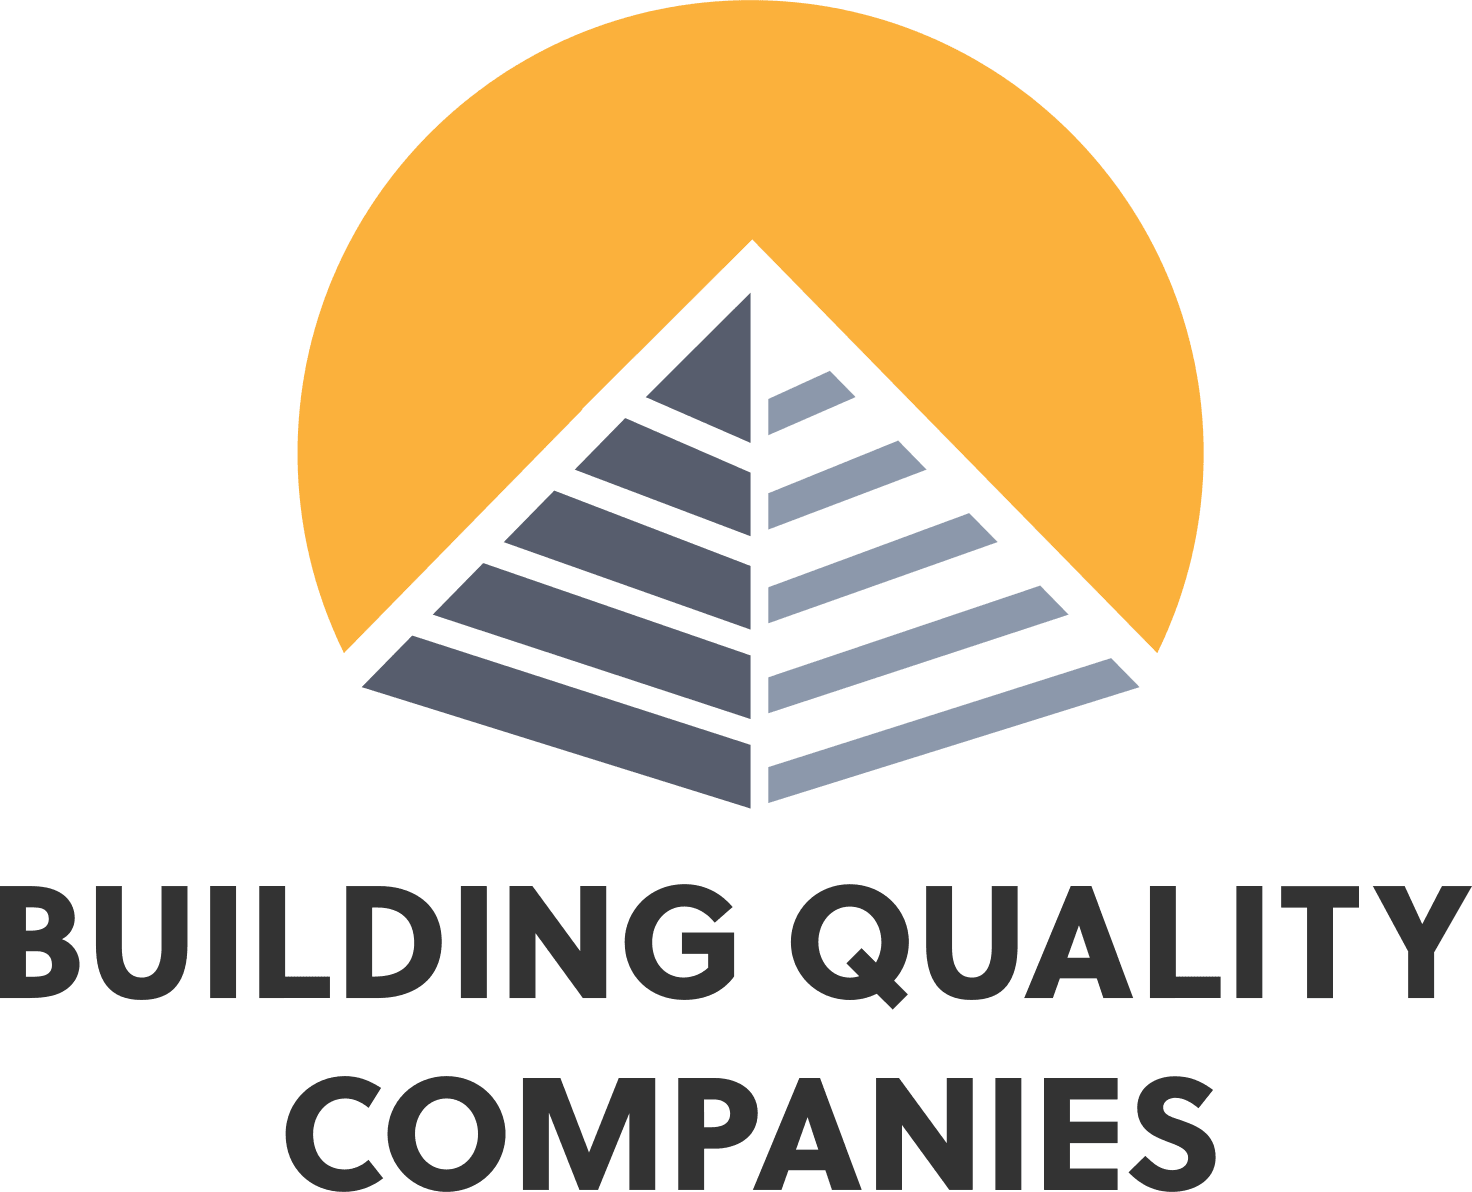 mockup design of building quality companies' logo